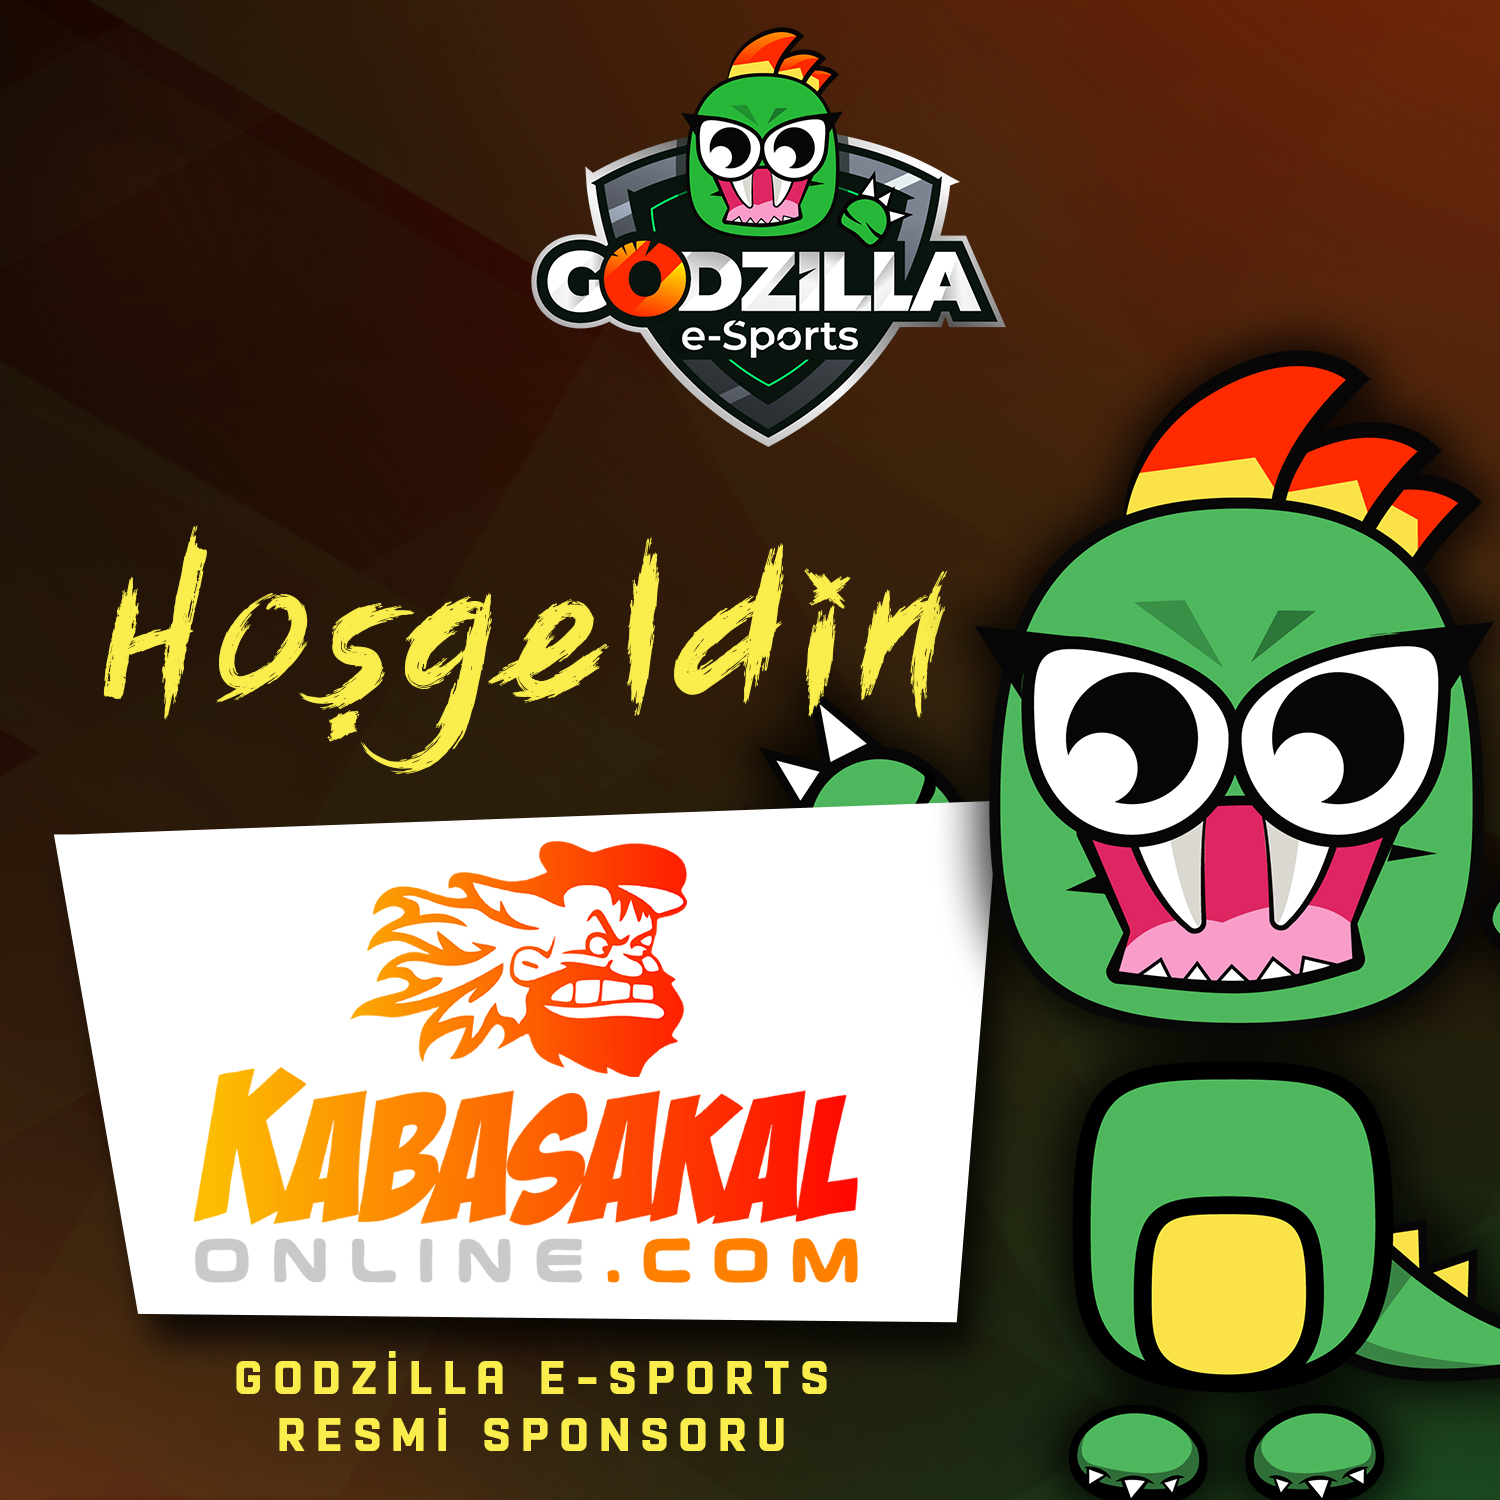 Godzilla e-Sports Kabasakal Online esportimes